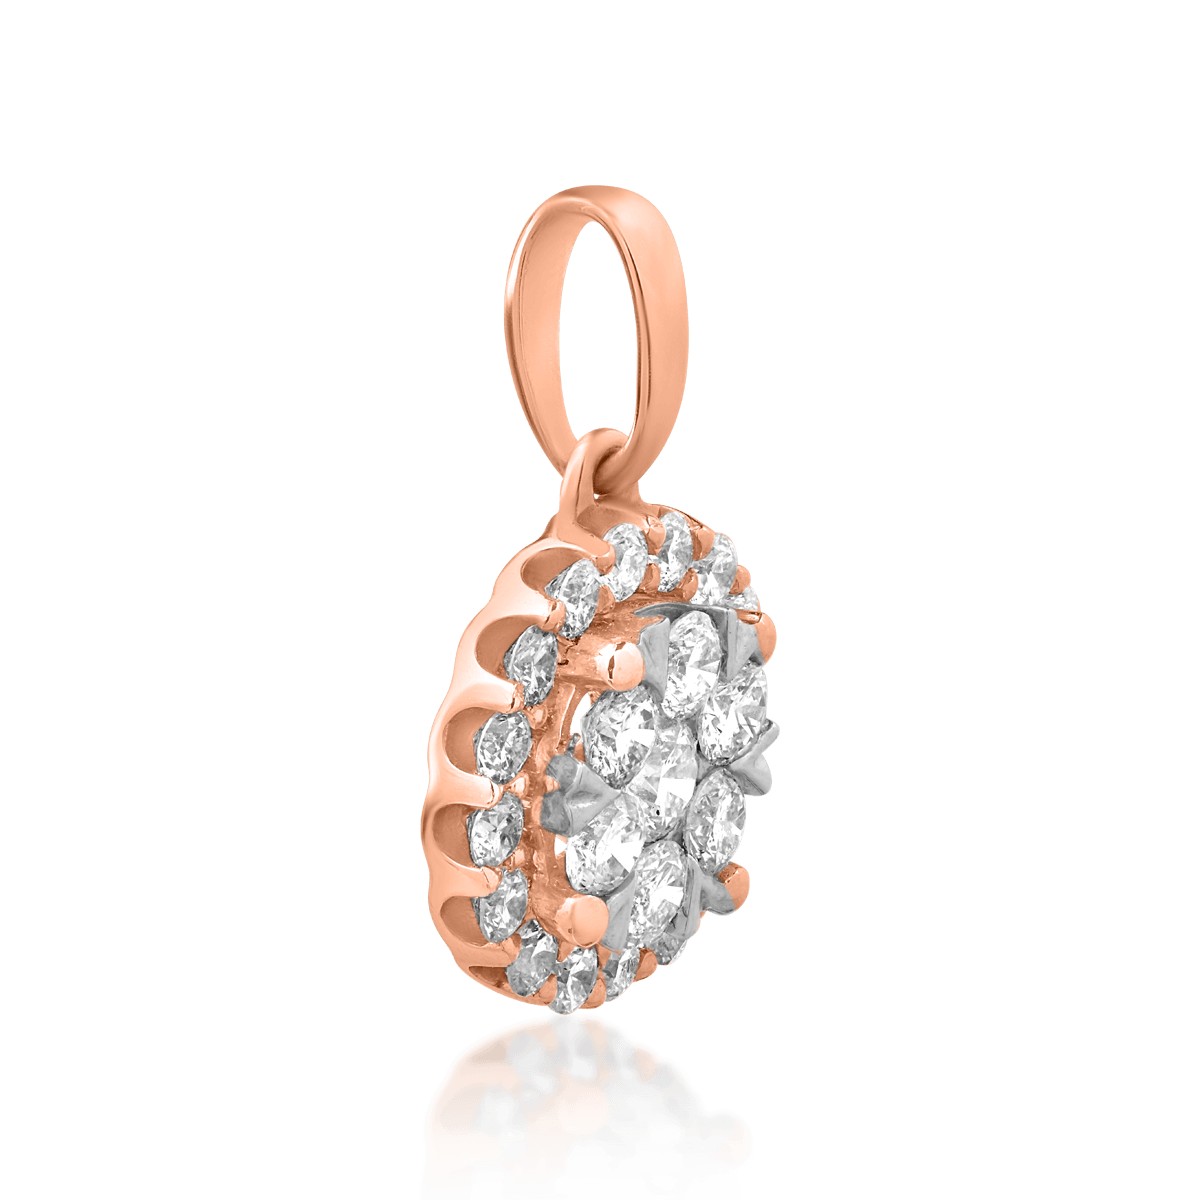 18K rose gold pendant with 0.5ct diamonds.